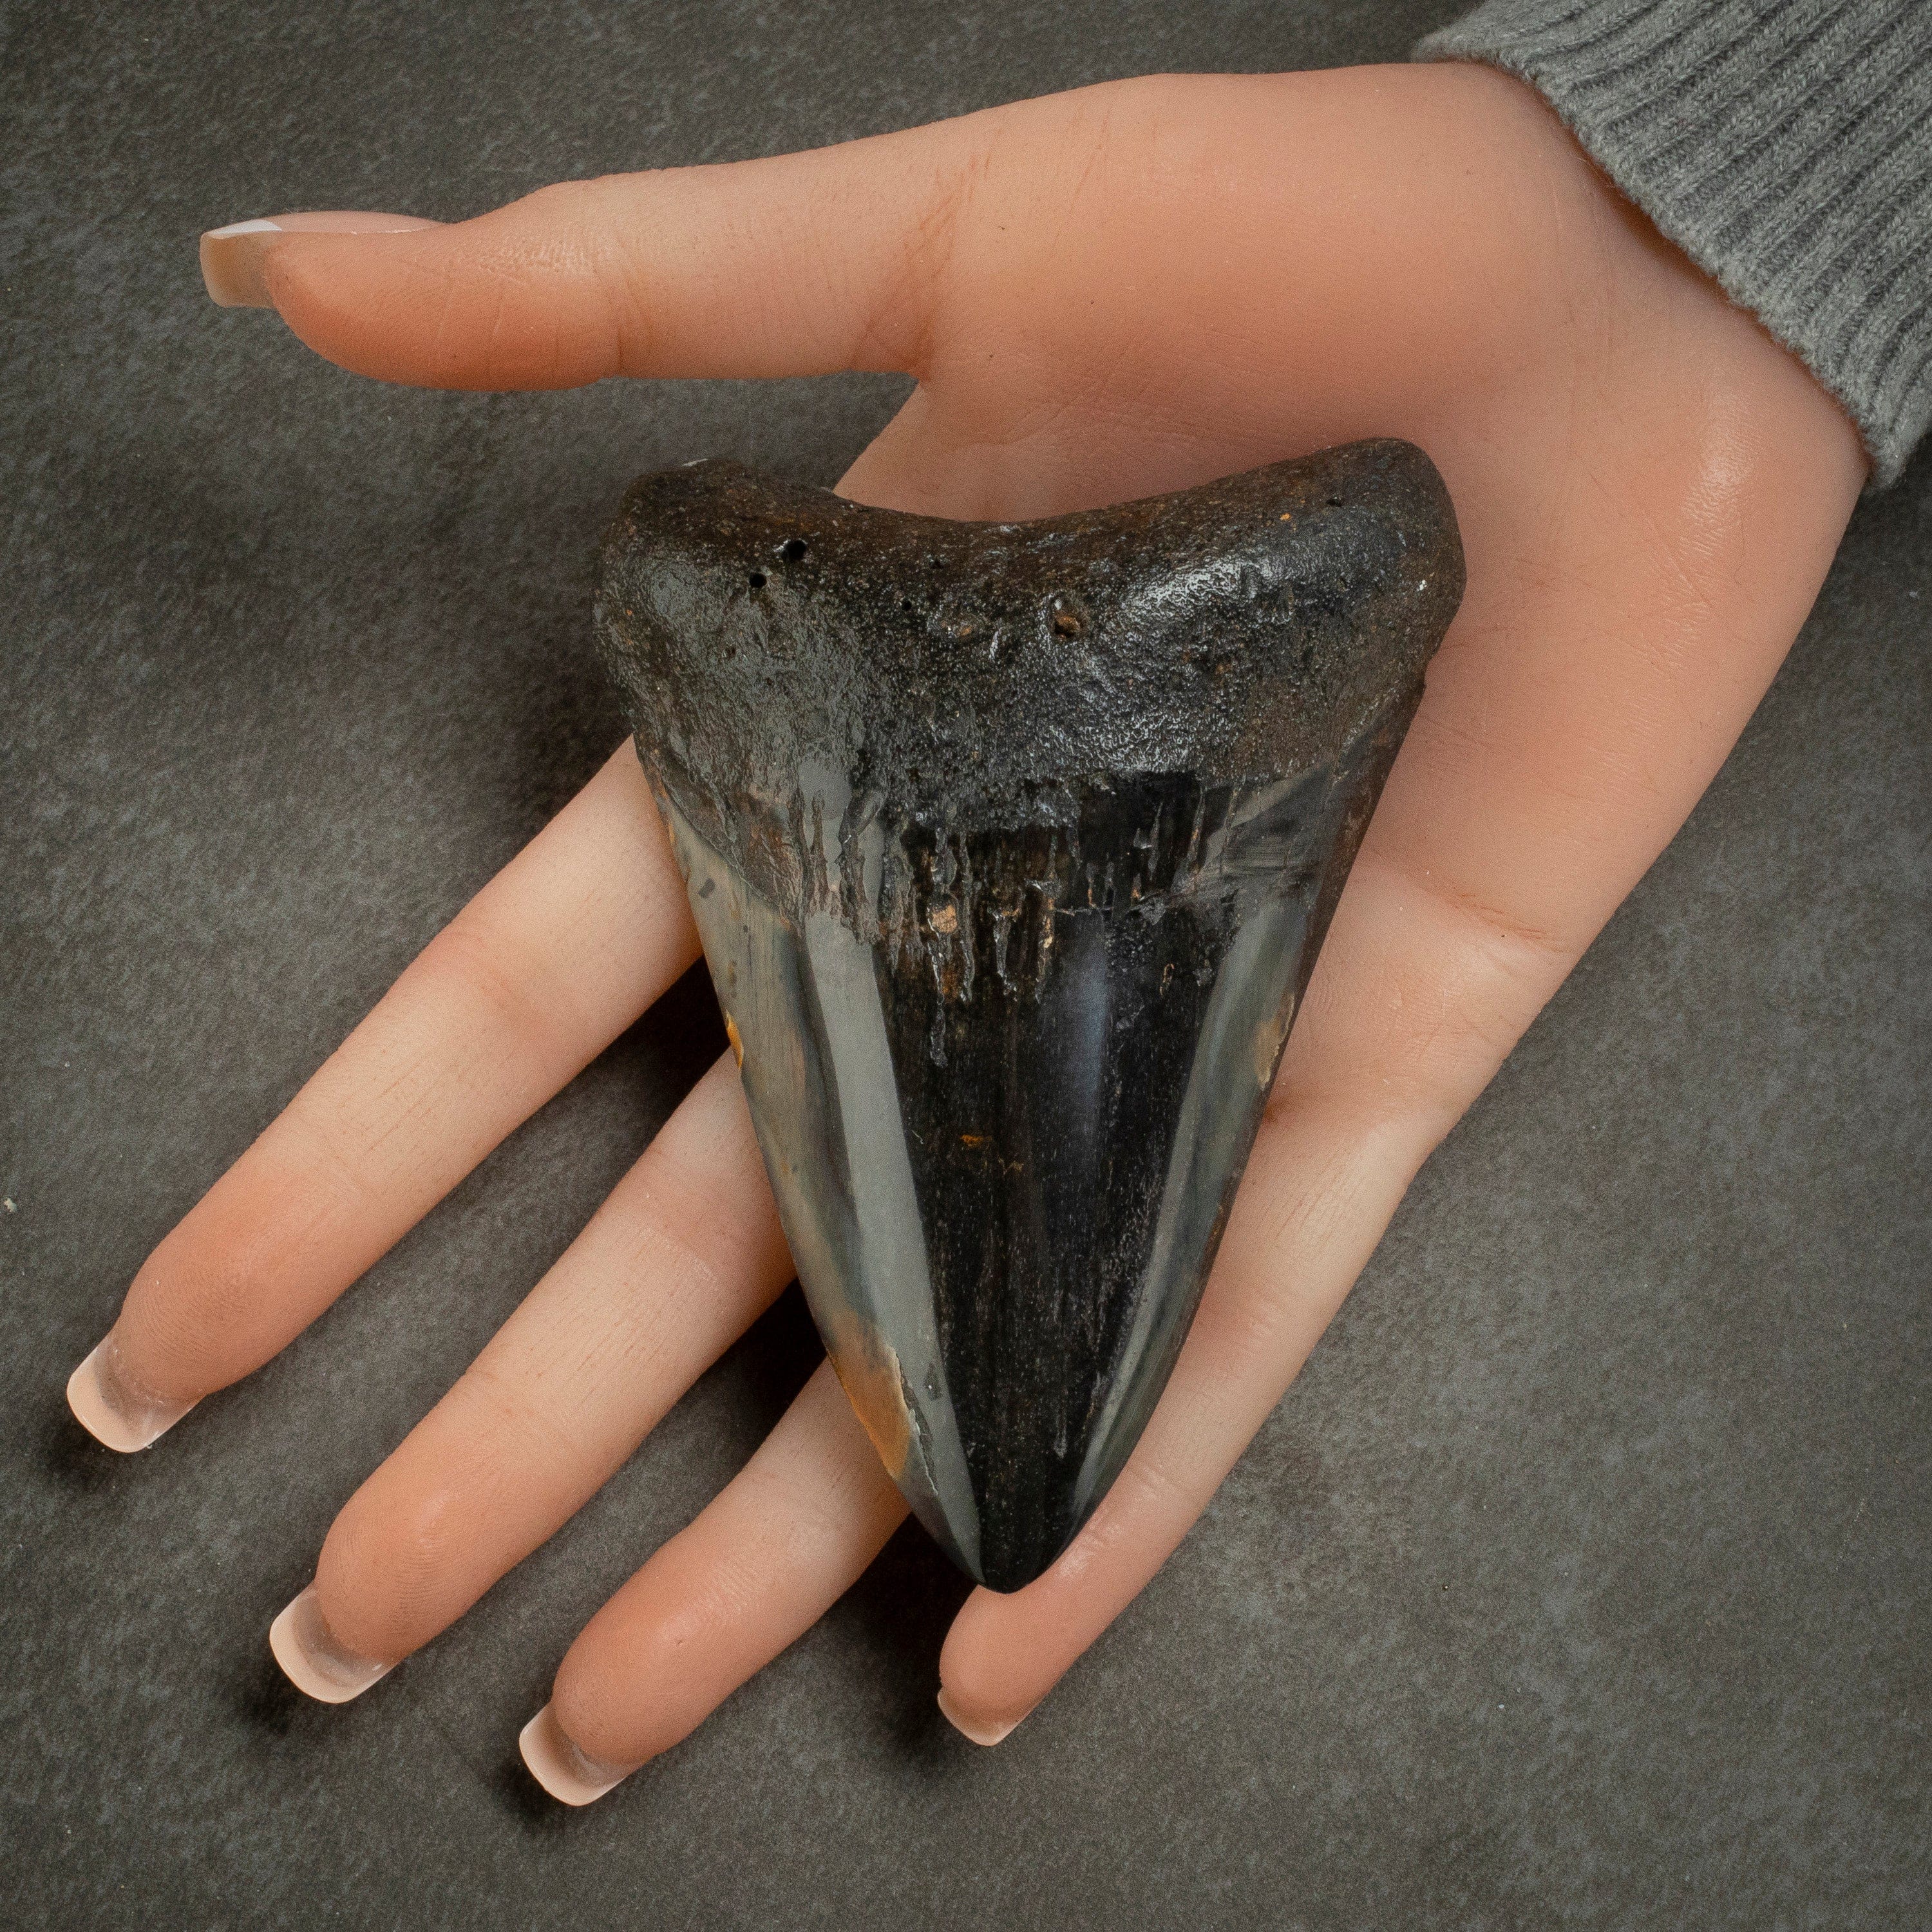 Kalifano Megalodon Teeth Megalodon Tooth from South Carolina - 4.0" ST2000.106